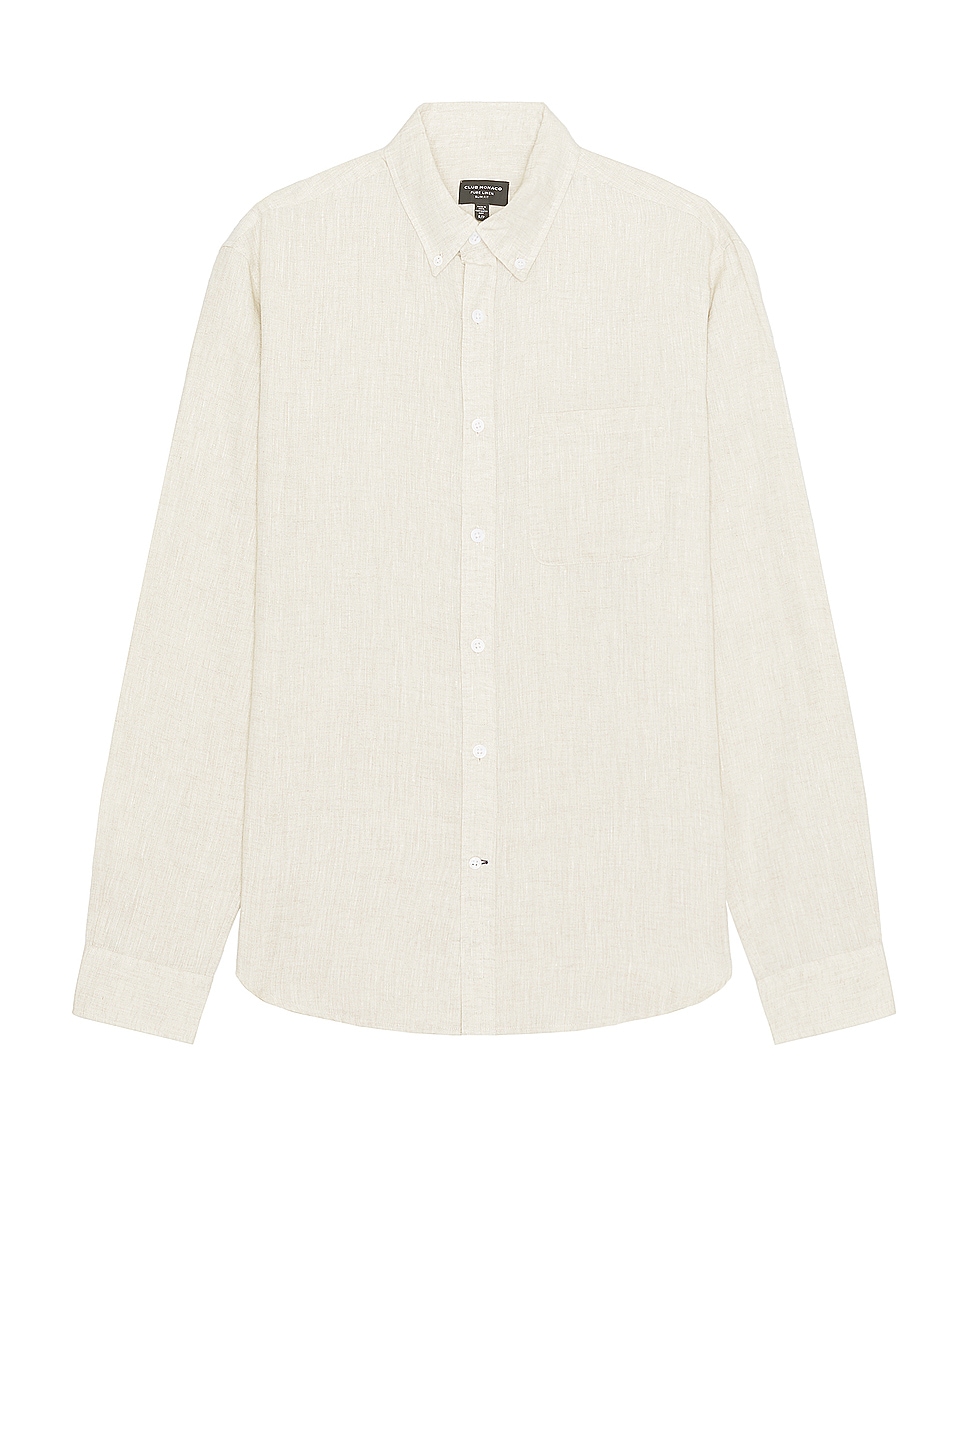 Long Sleeve Solid Linen Shirt in Cream